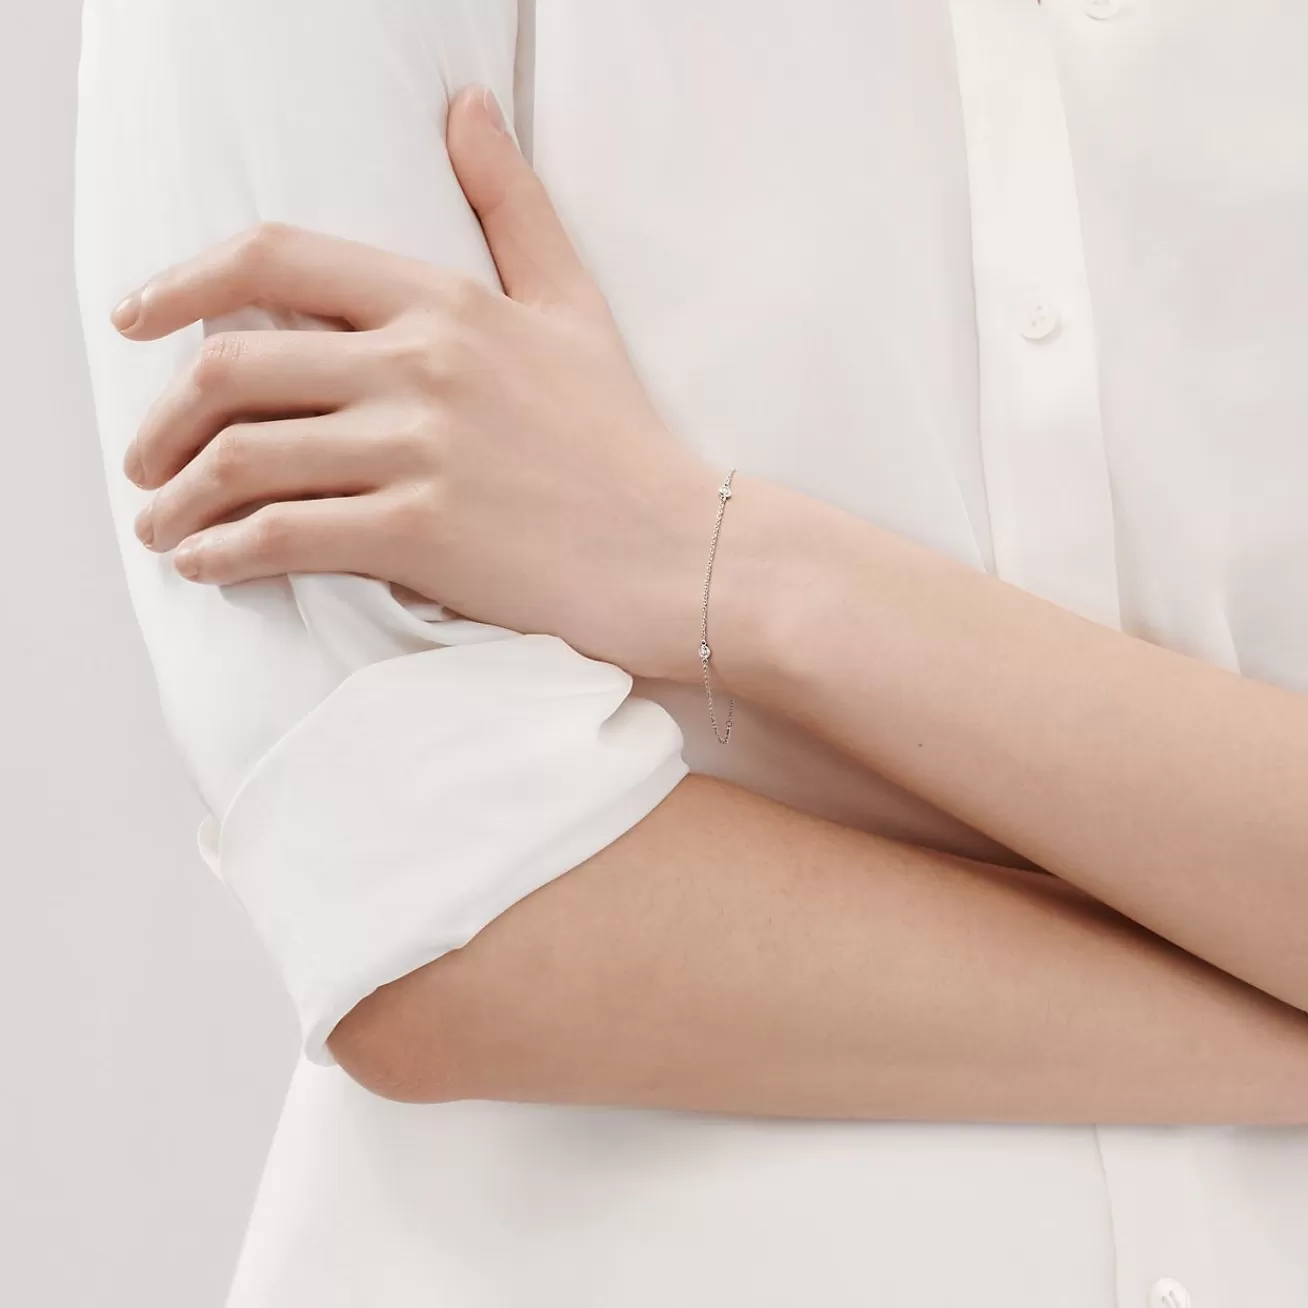 Tiffany & Co. Elsa Peretti® Diamonds by the Yard® bracelet in platinum. | ^ Bracelets | Platinum Jewelry